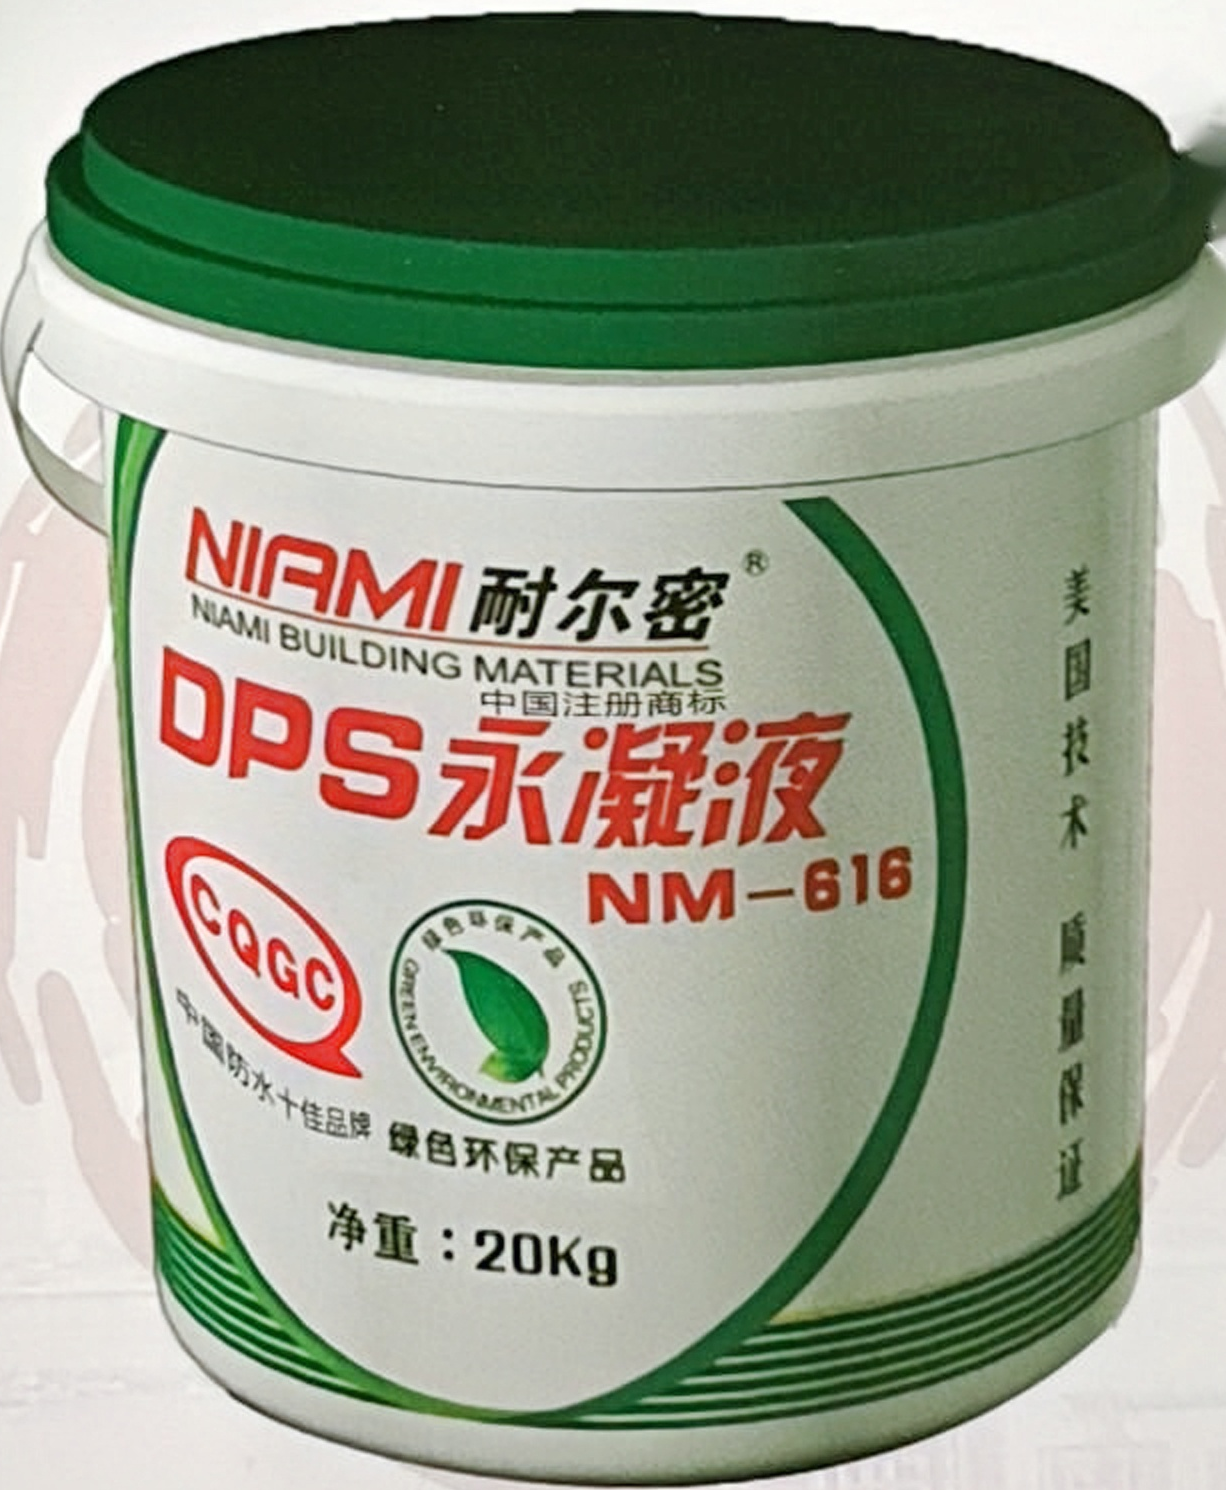 NM---614   DPS永凝液